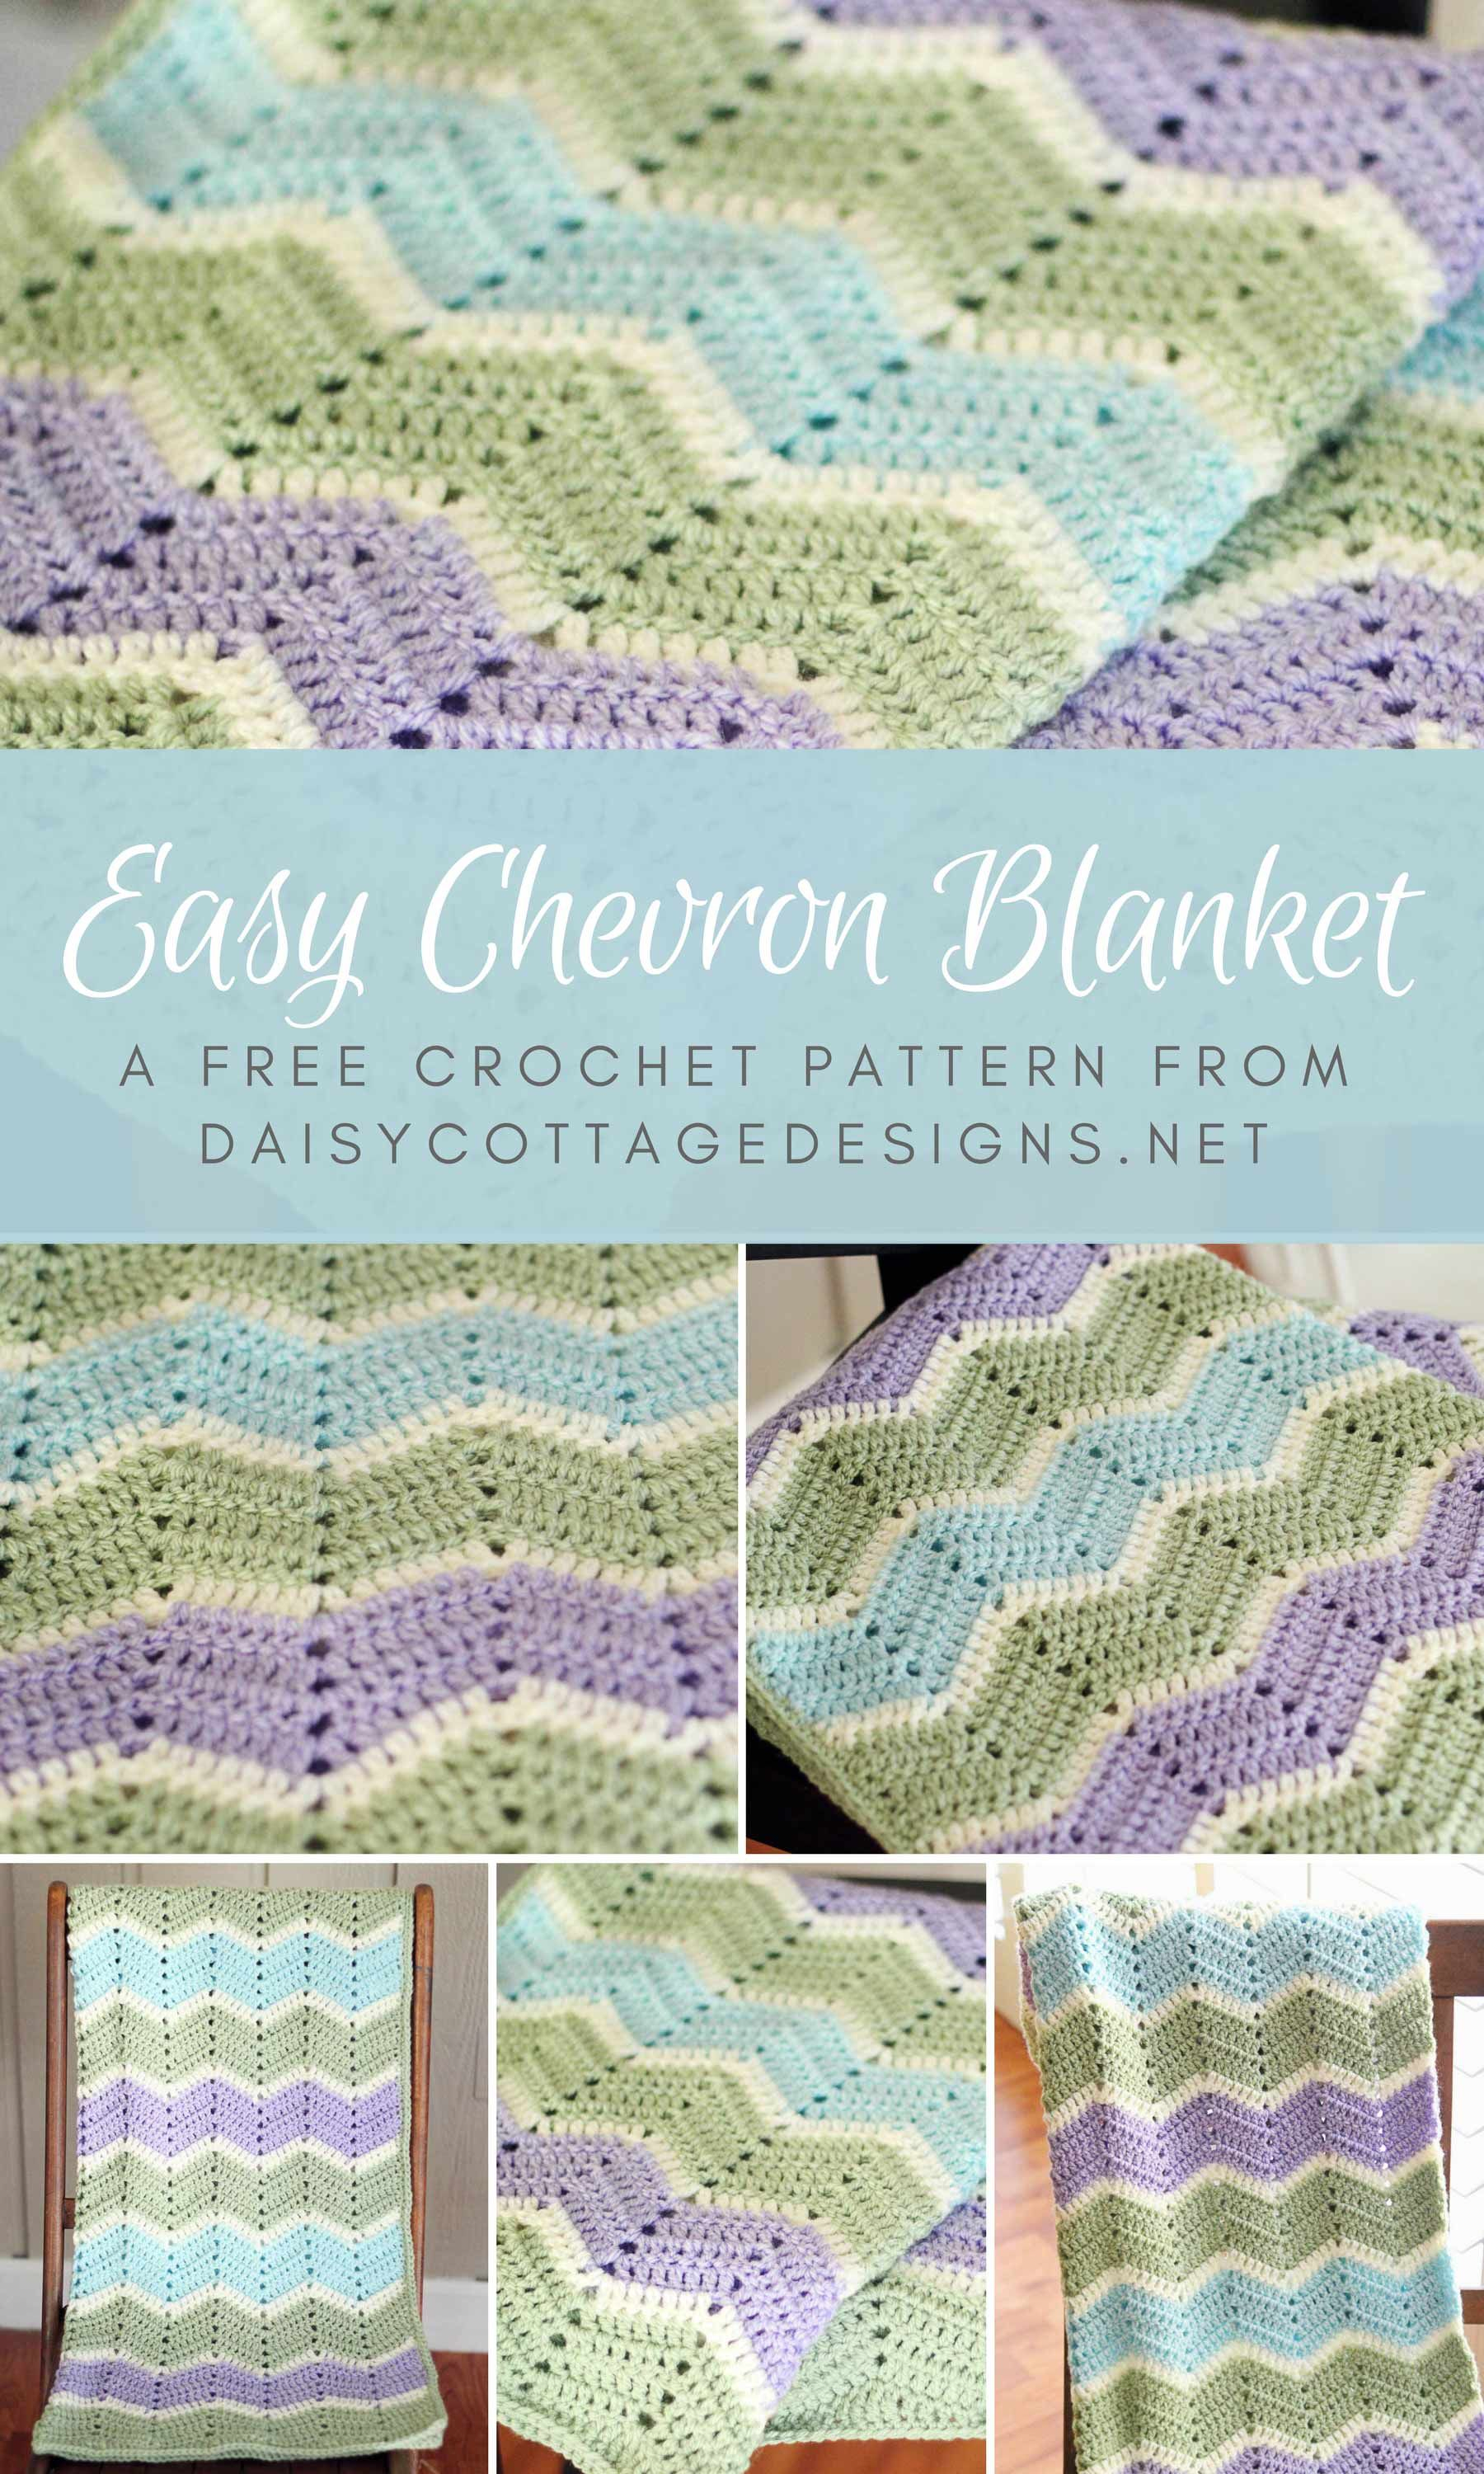 Easy Chevron Crochet Pattern Easy Chevron Blanket Crochet Pattern Best Of Daisy Cottage Designs